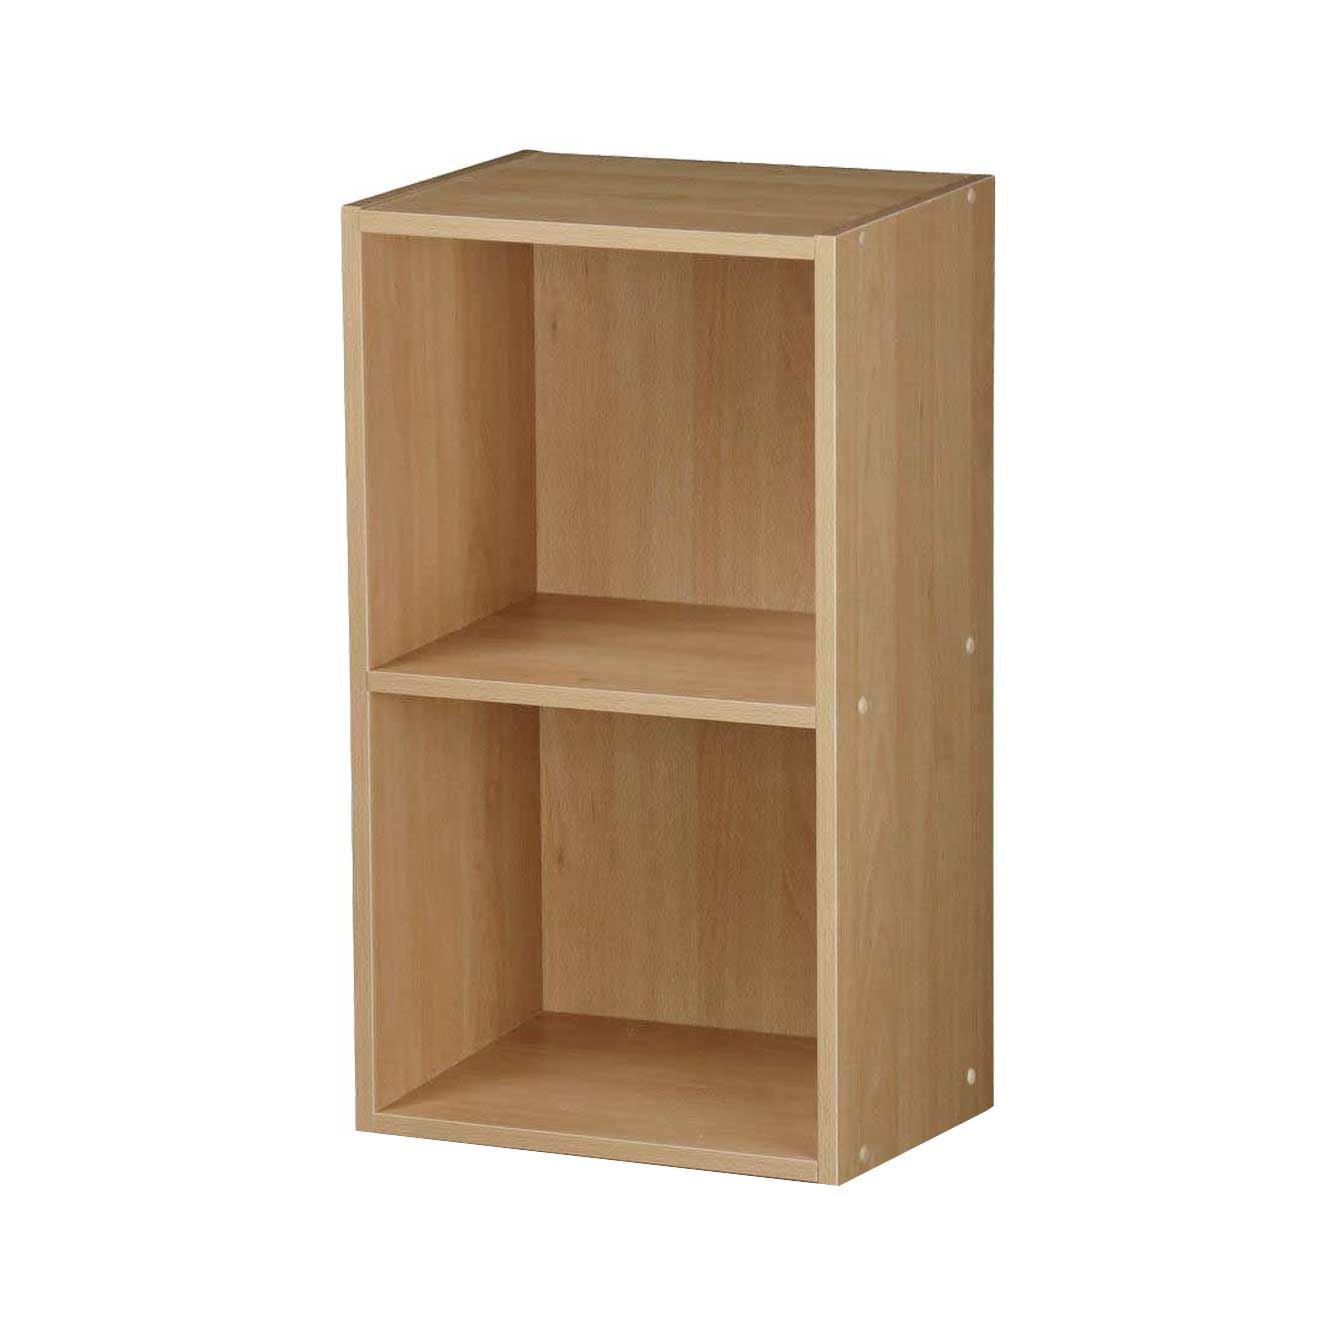 Green Wooden Bookshelf Organizer for Home or Office